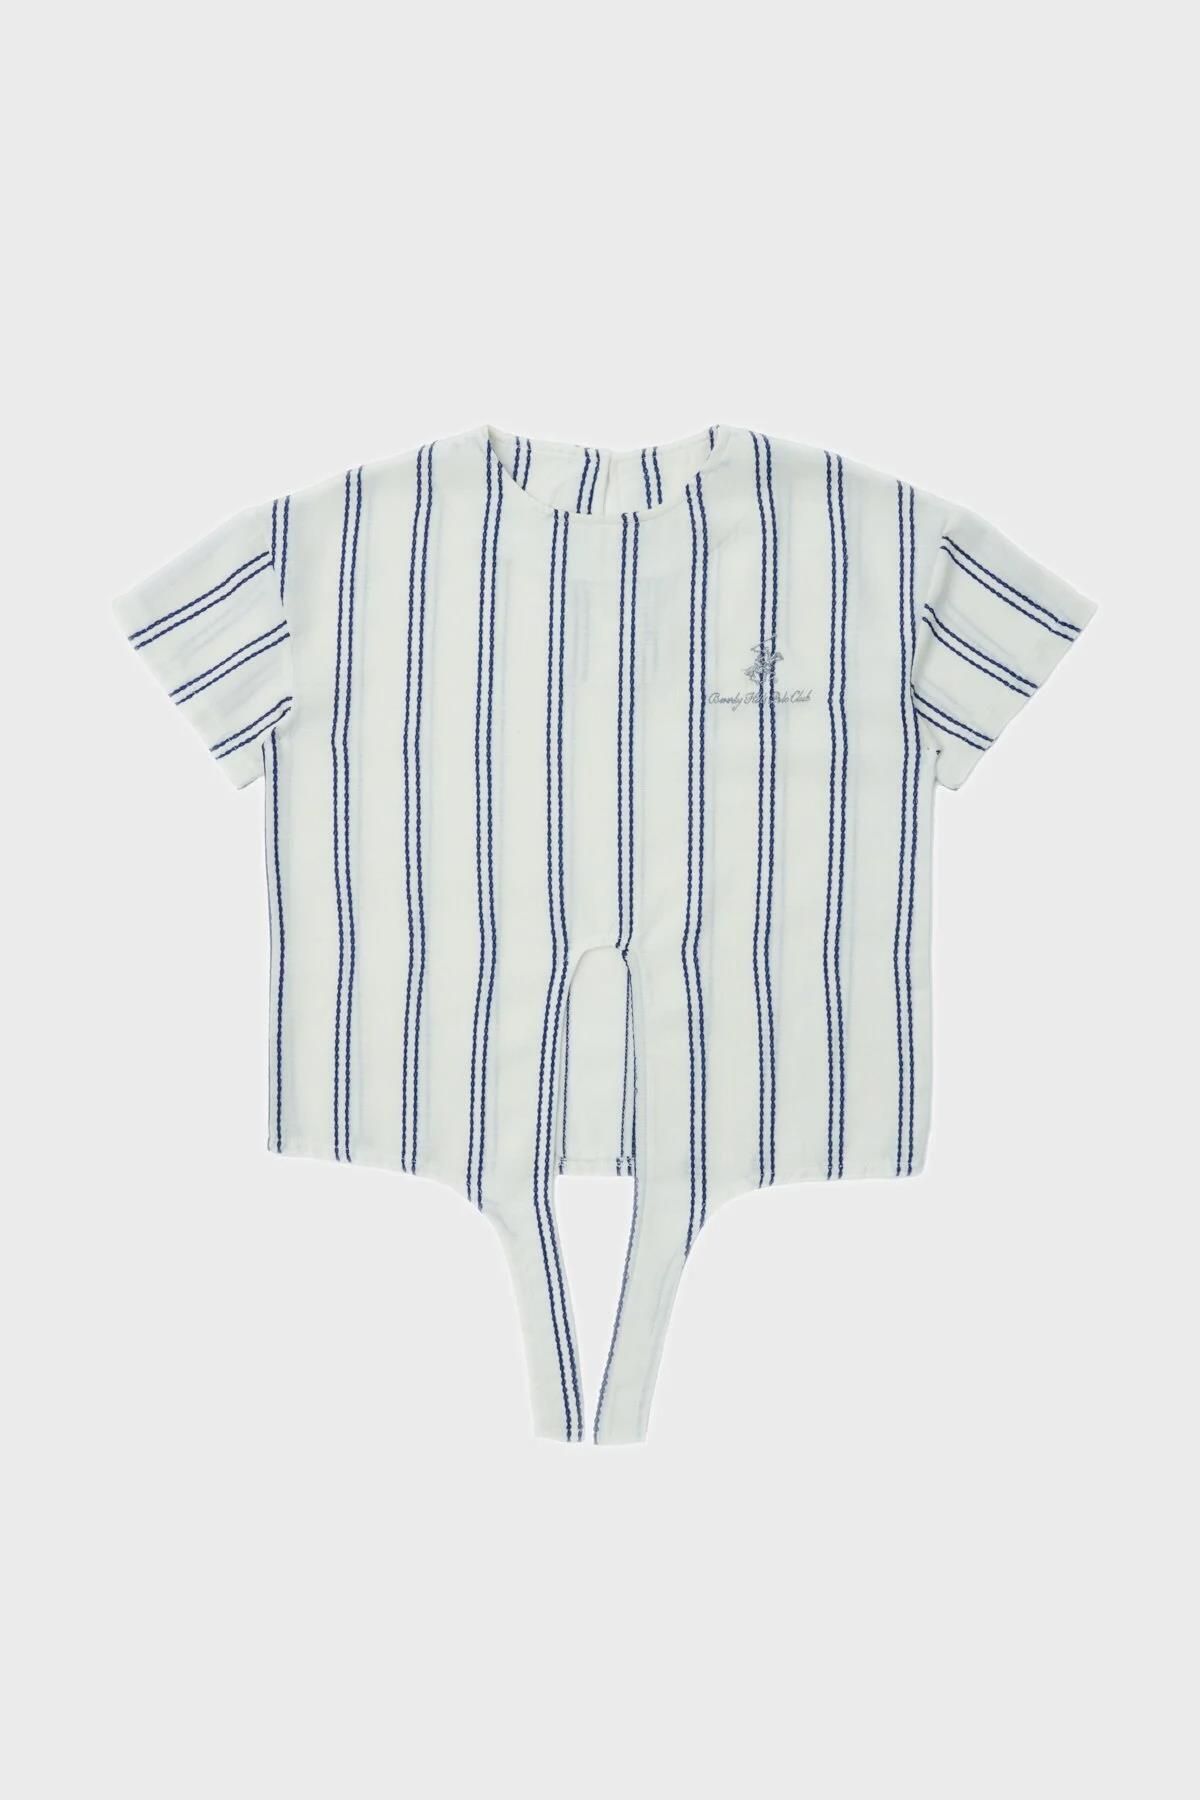 Beverly Hills Polo Club Bg Store Kız Çocuk Çizgili T-shirt 23ss2bhg531